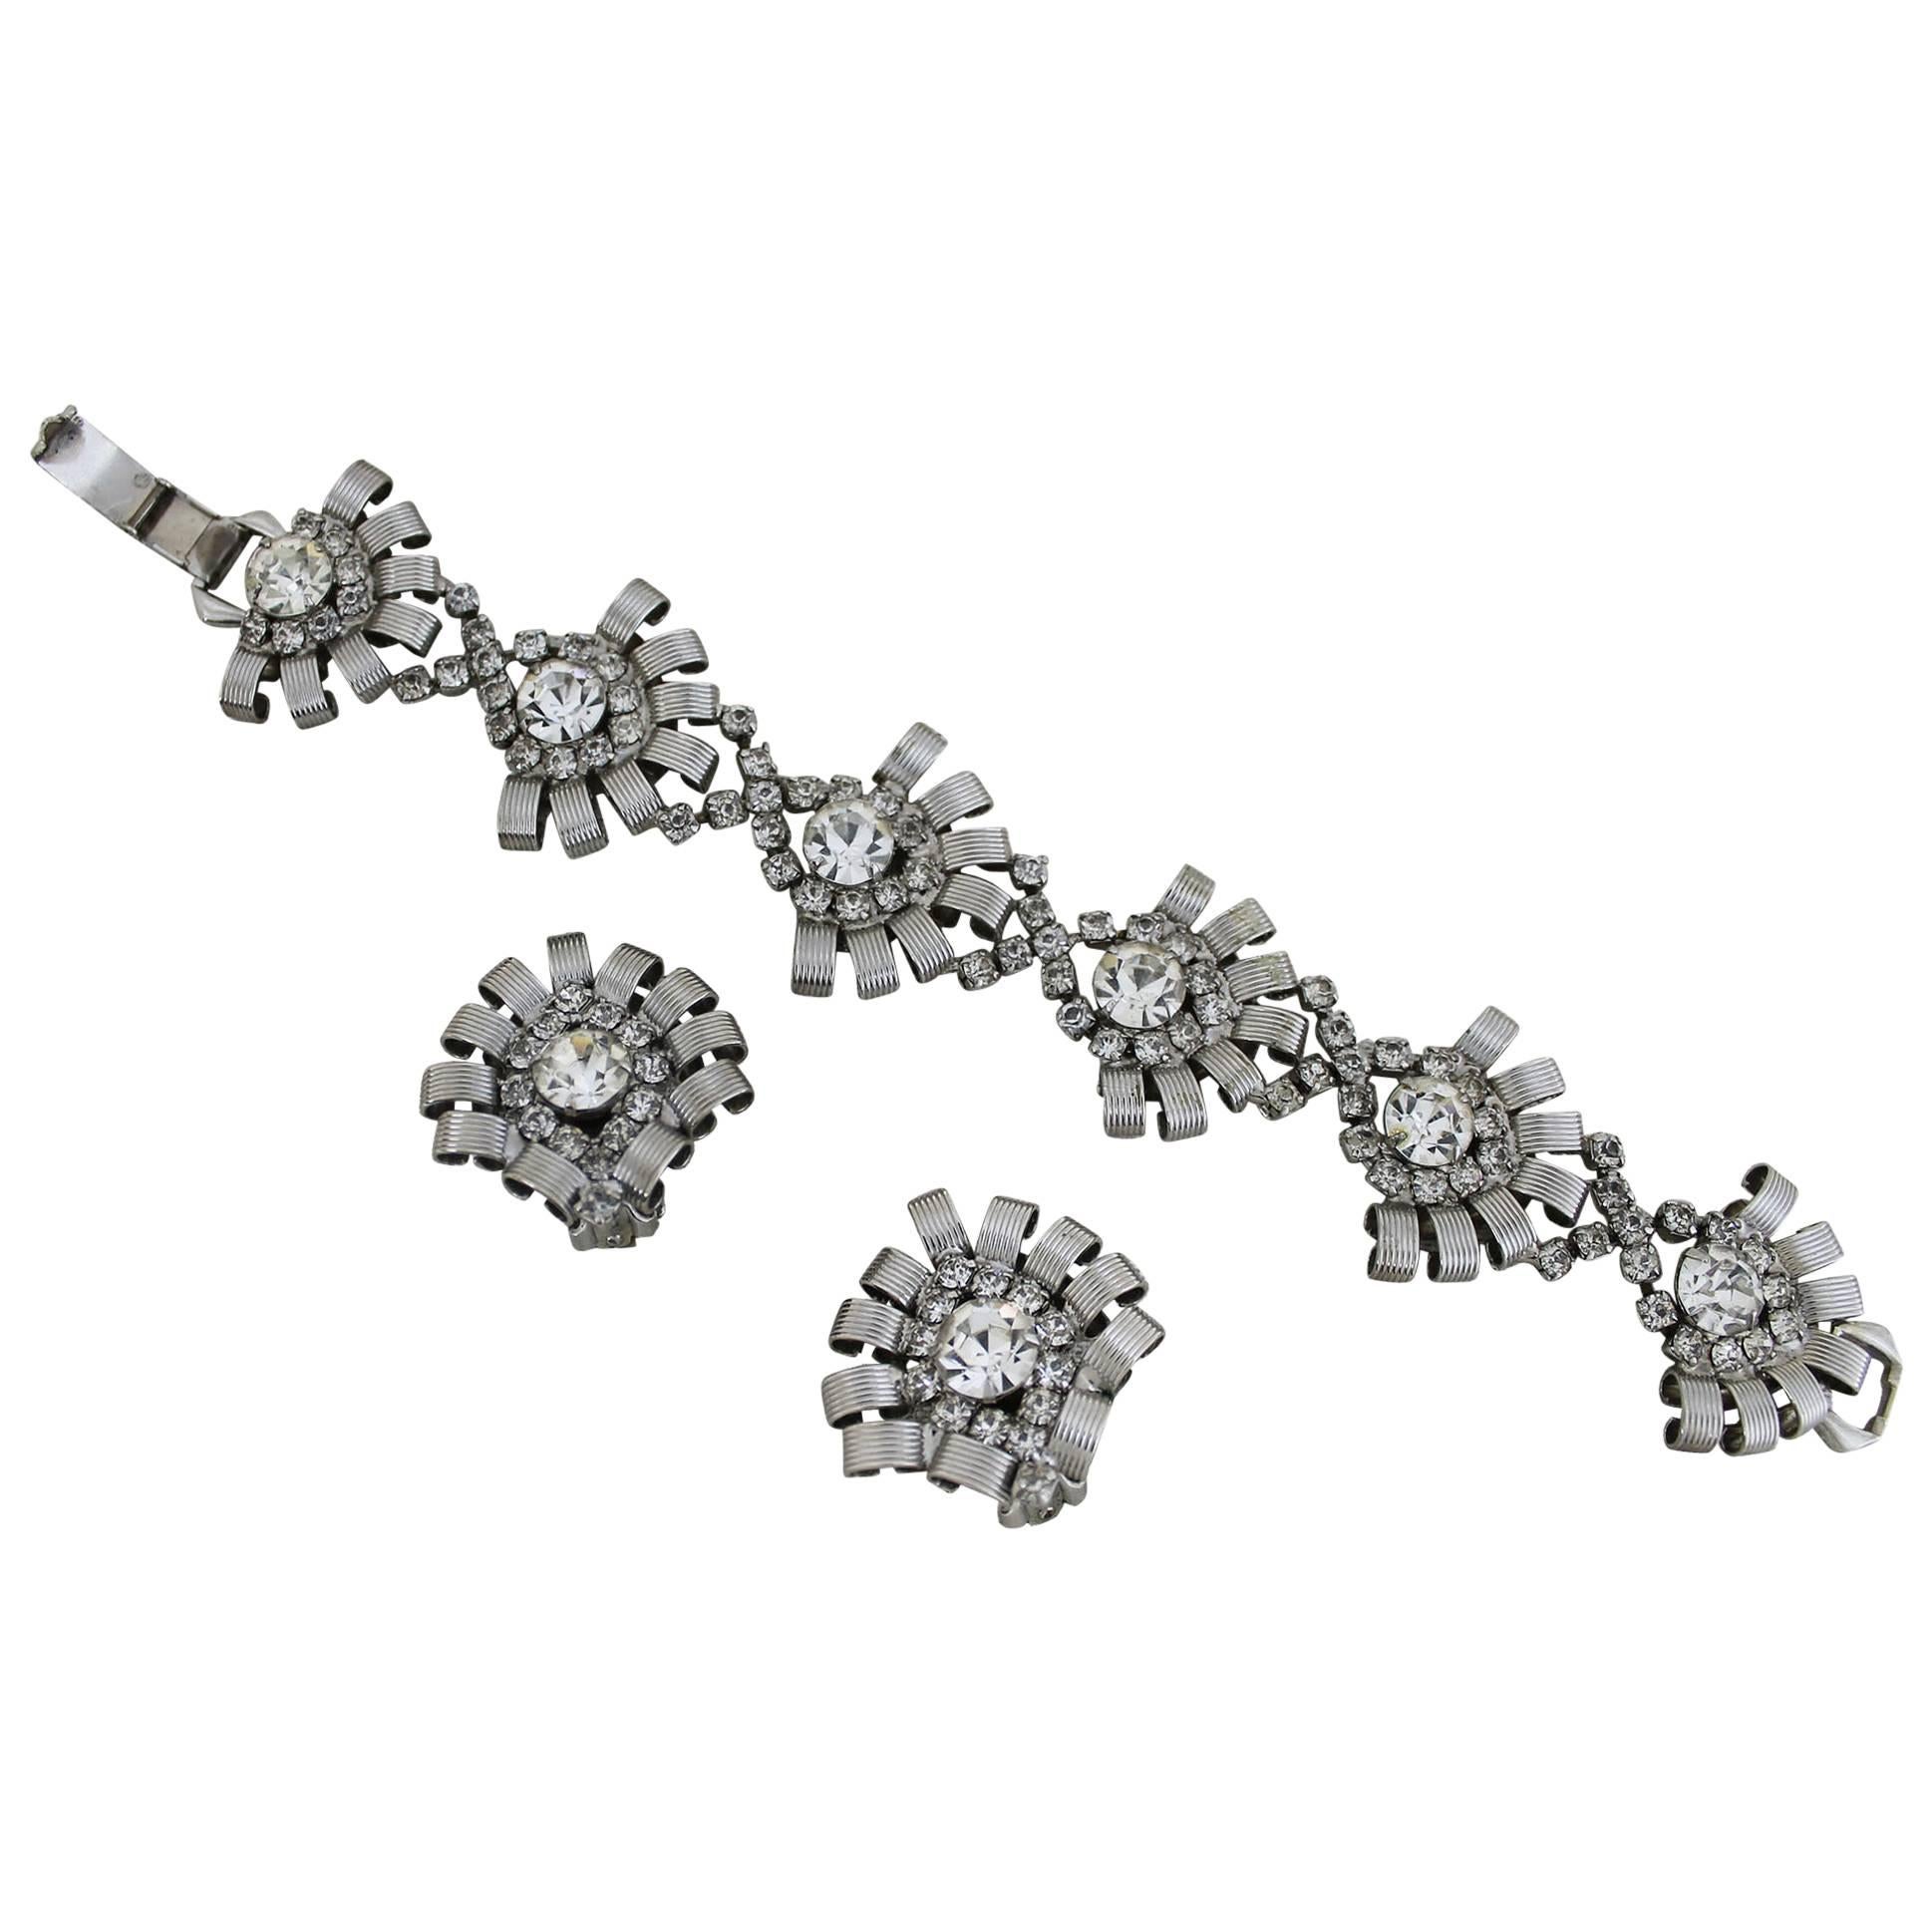 Vintage Hobé Silver-Tone and Rhinestone Bracelet and Earrings